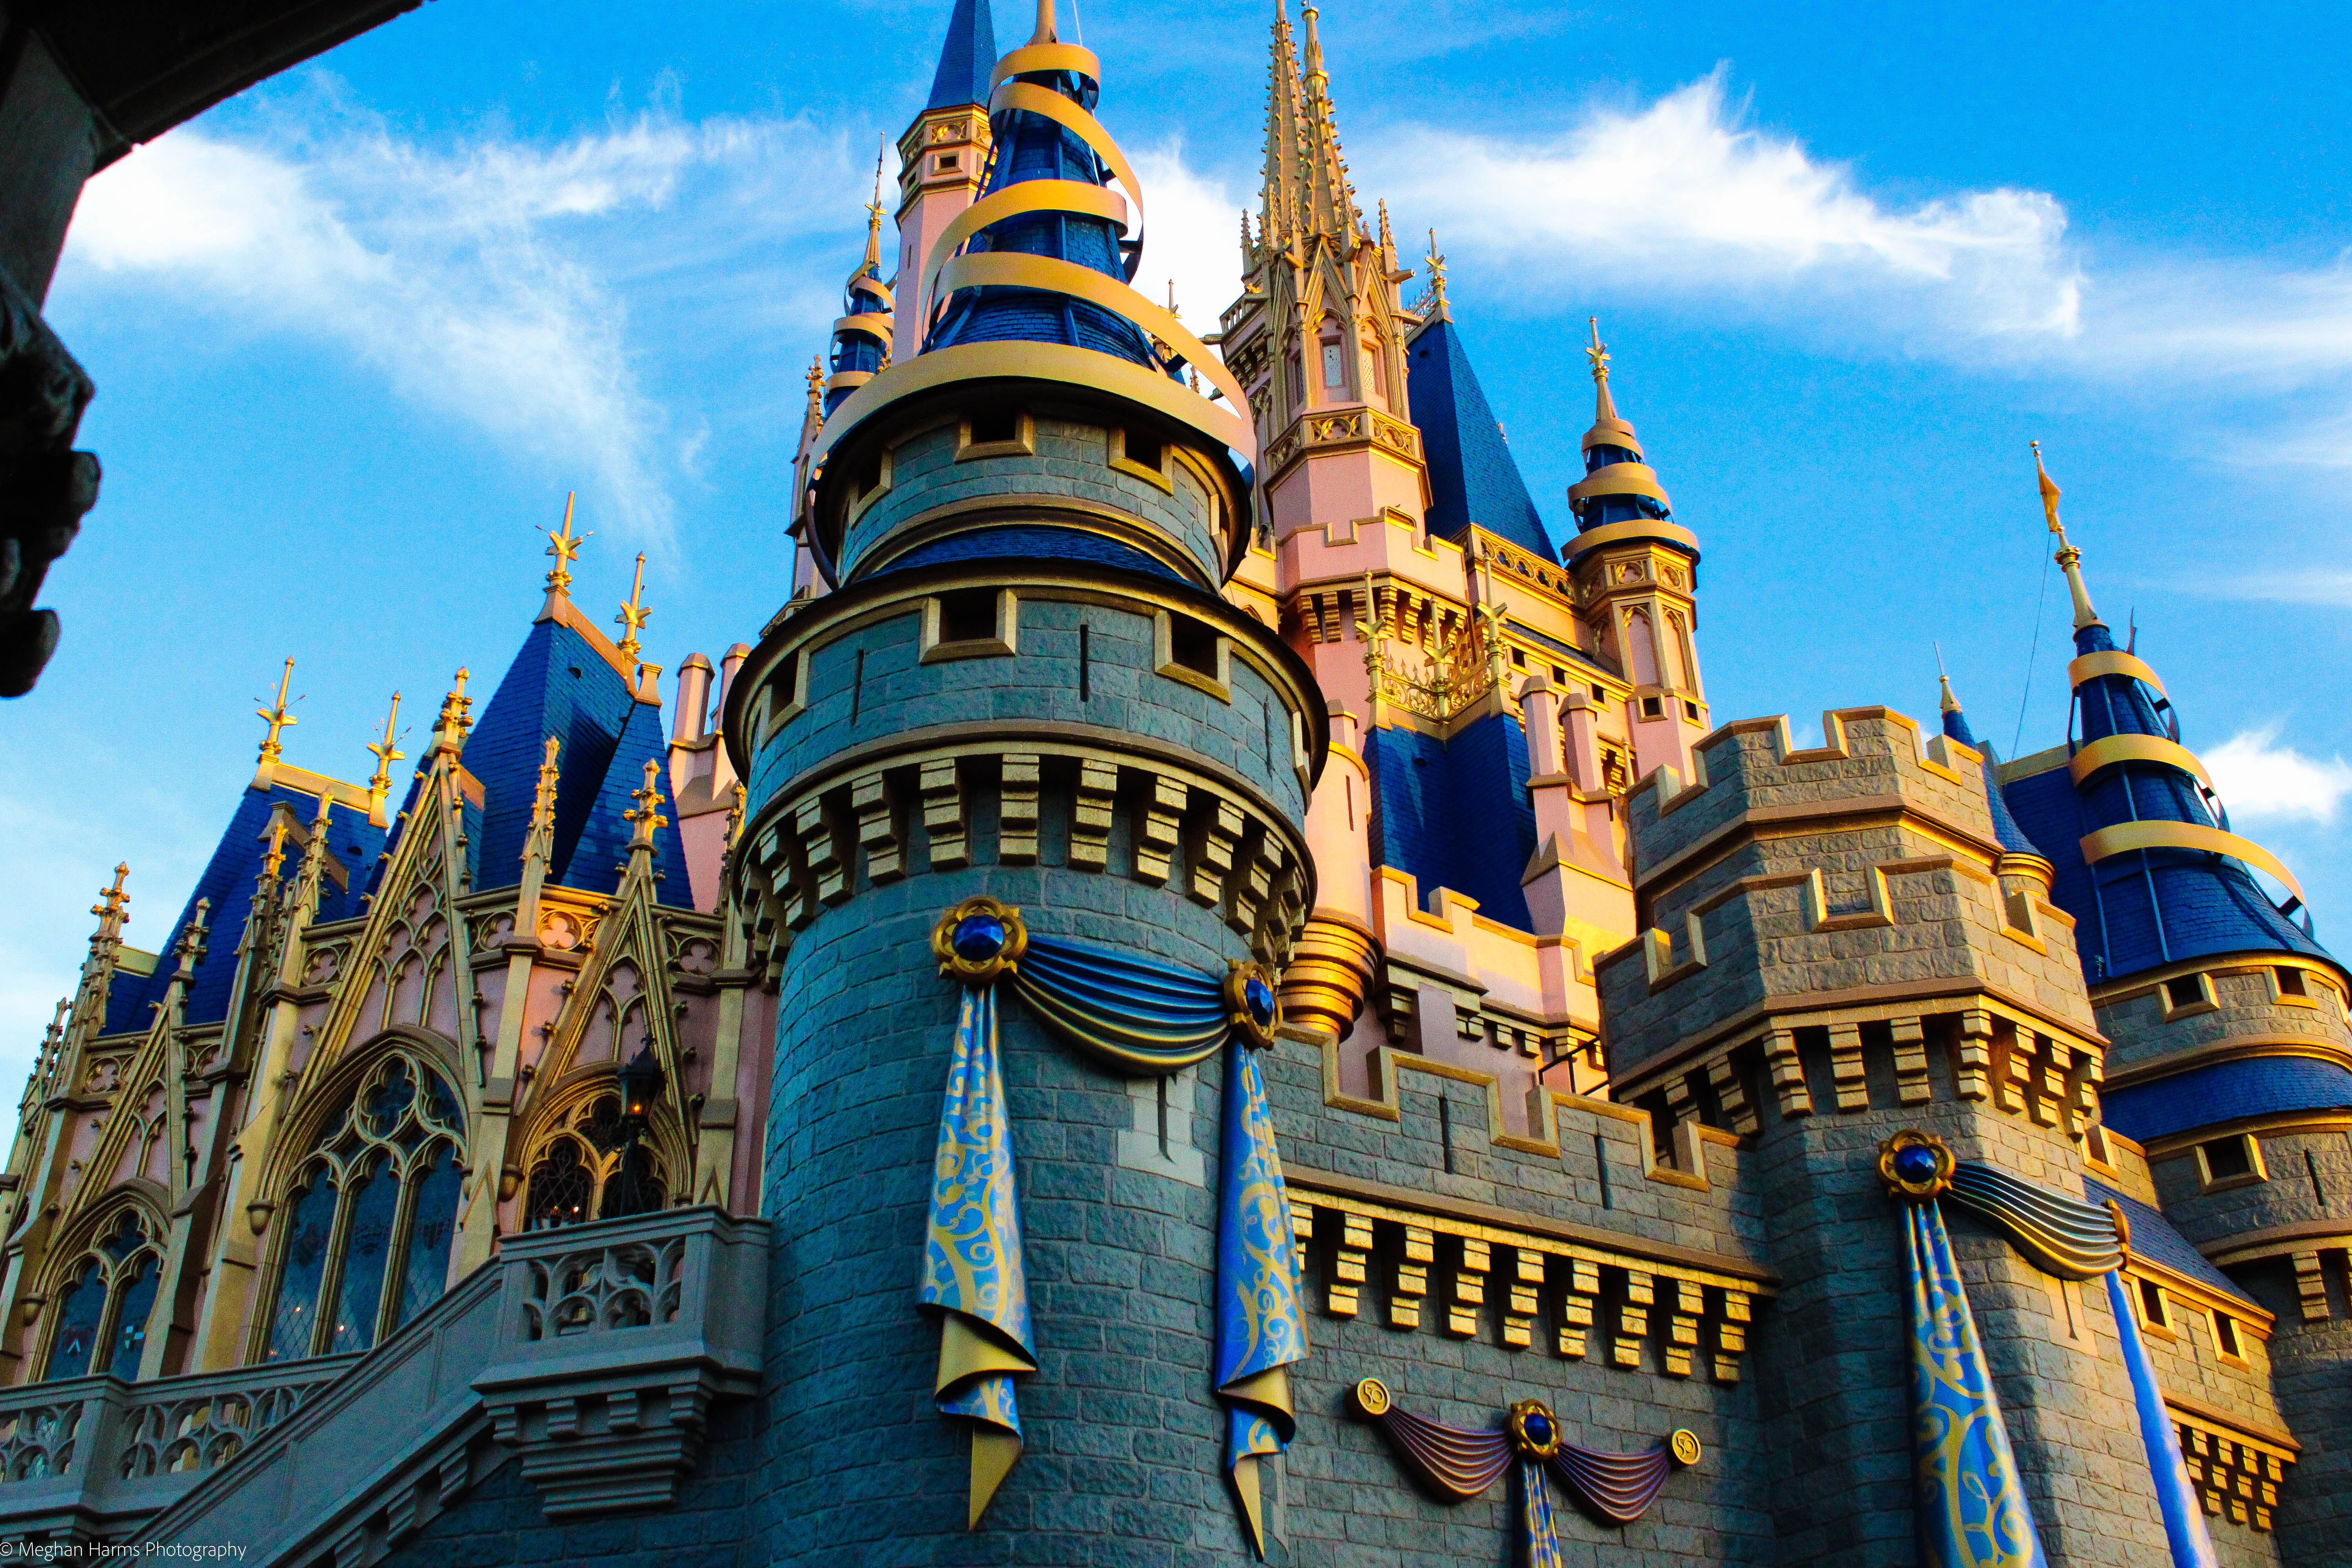 Cinderella's castle in Magic Kingdom from the back corner